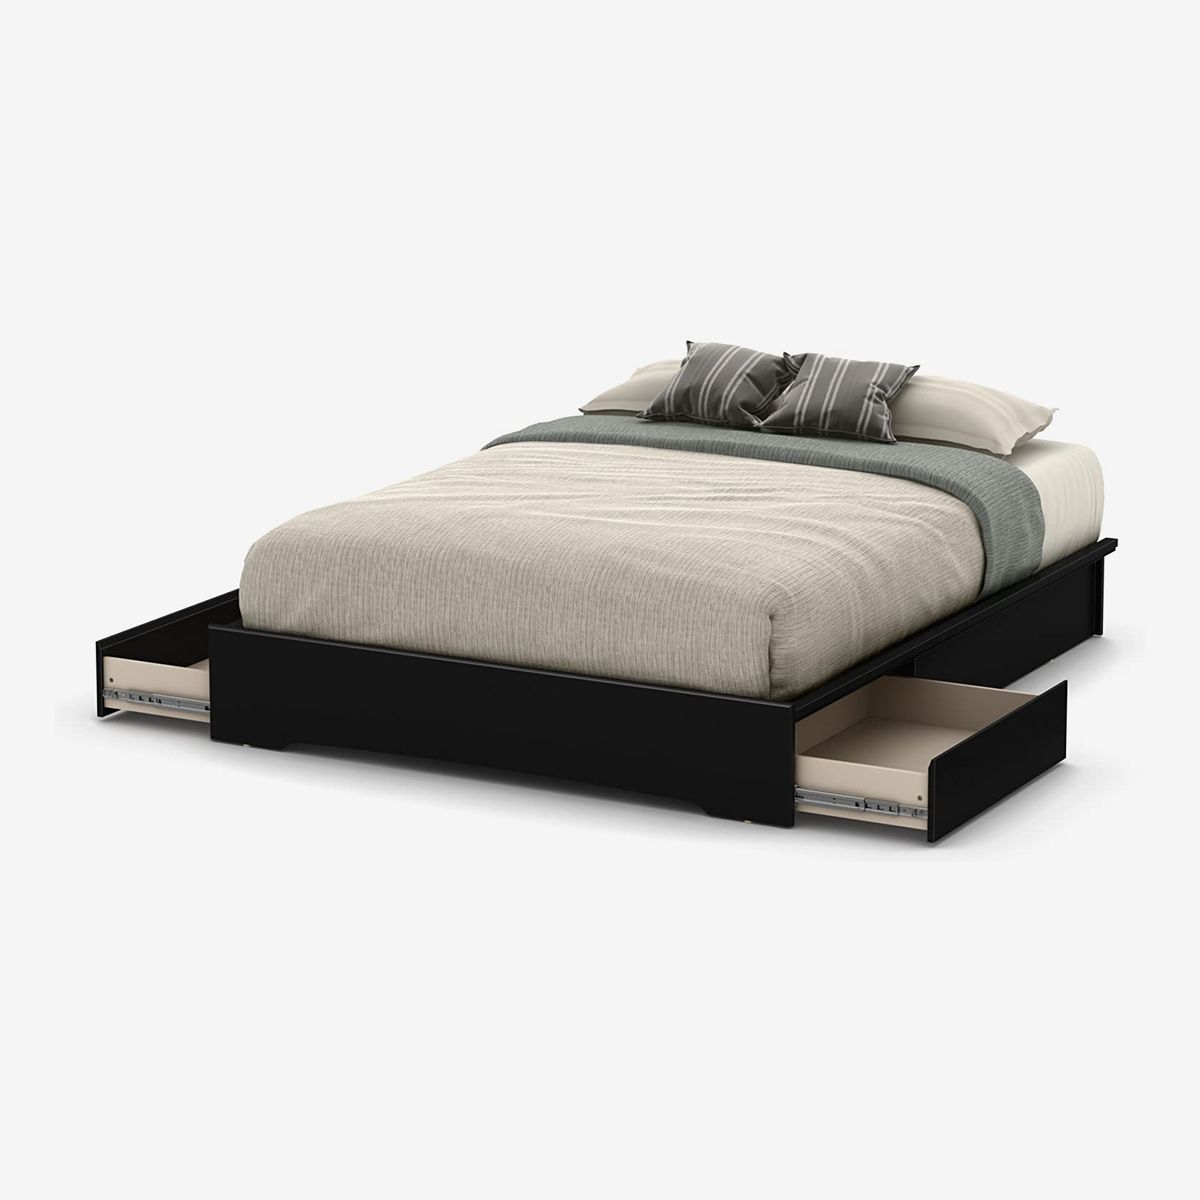 Modern Platform Beds With Storage, King Bed Frame With Under Storage